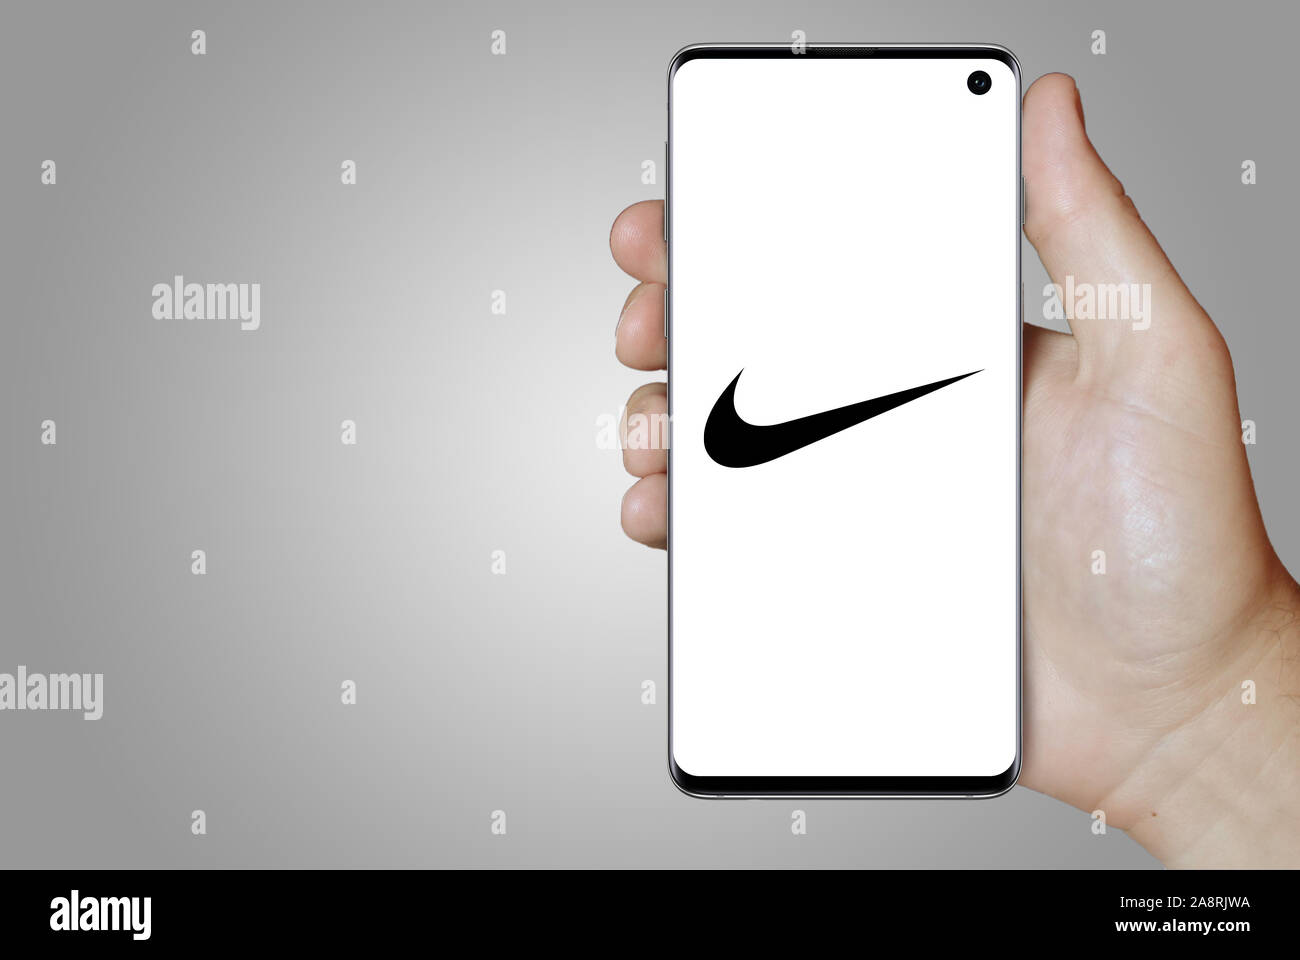 Logo of public company Nike displayed on a smartphone. Grey background.  Credit: PIXDUCE Stock Photo - Alamy